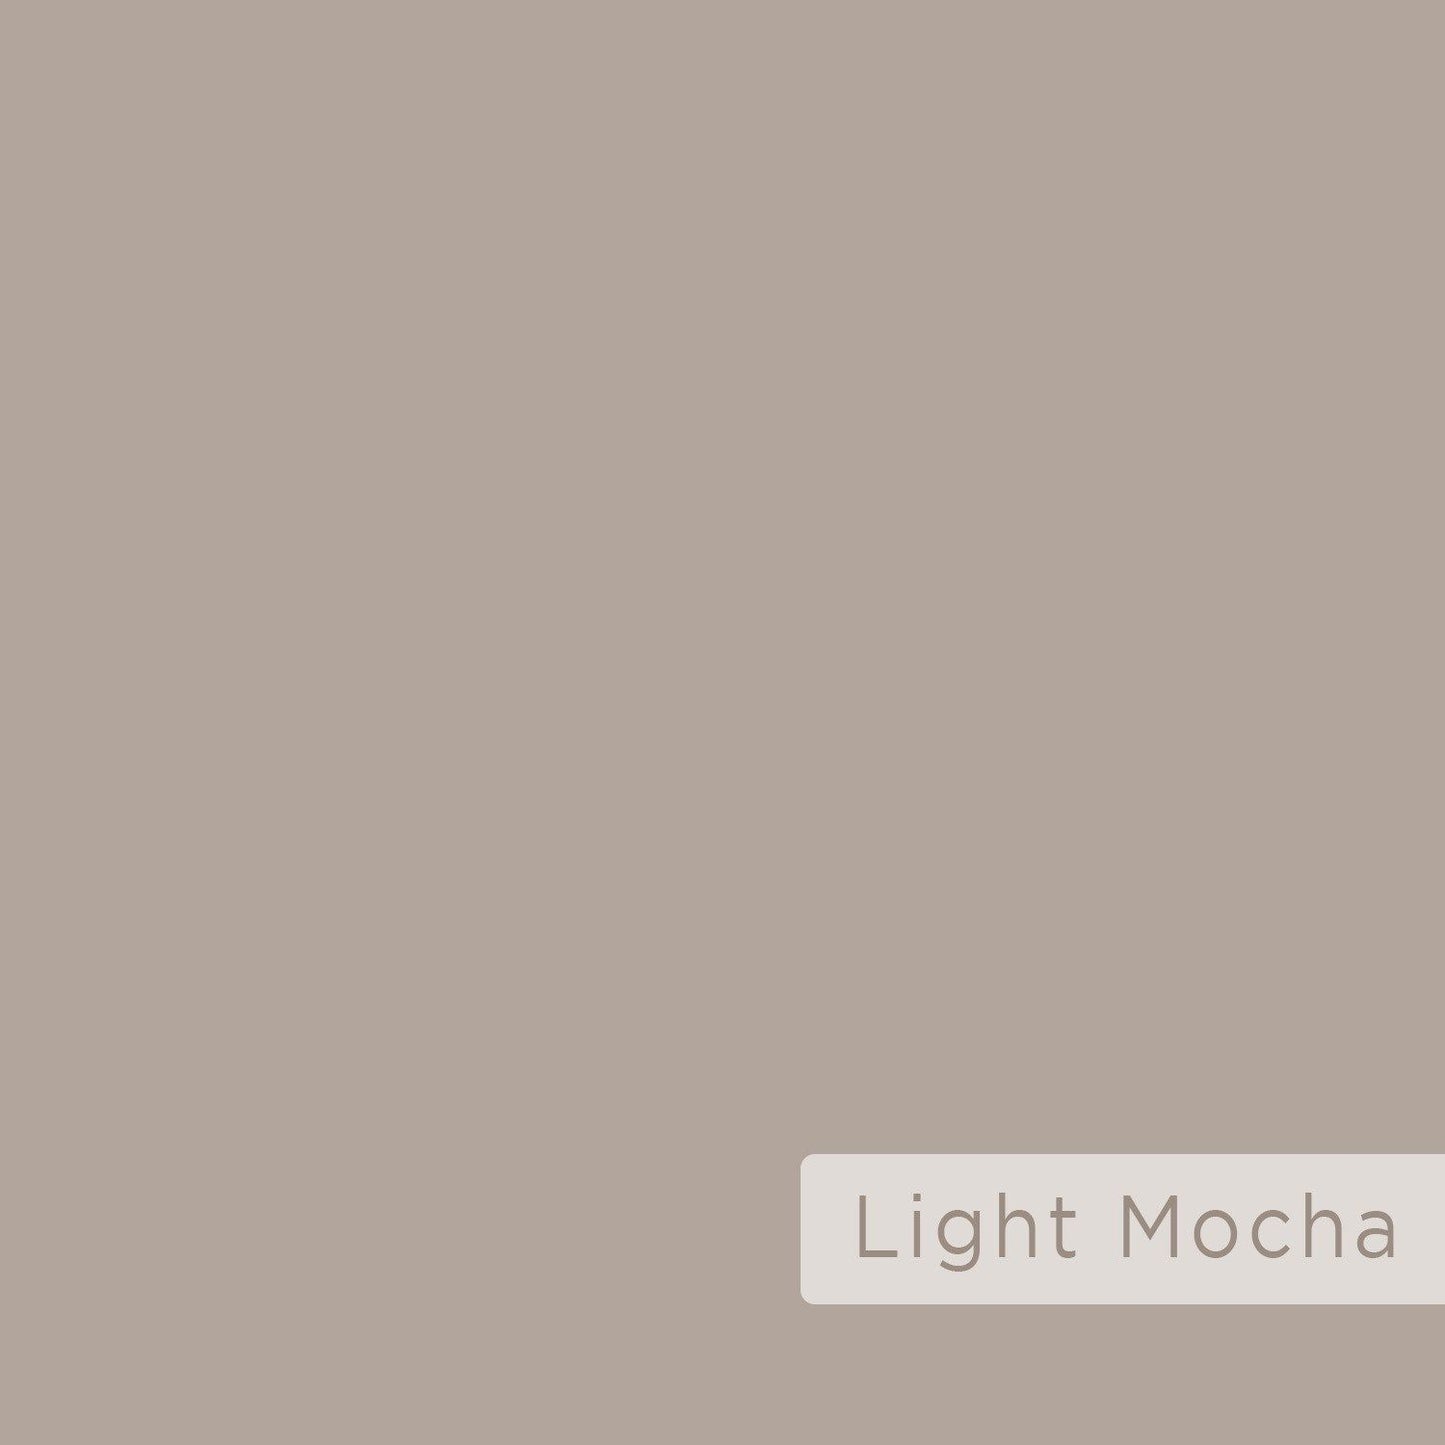 Stair - Light Mocha - Multi Purpose Cabinet